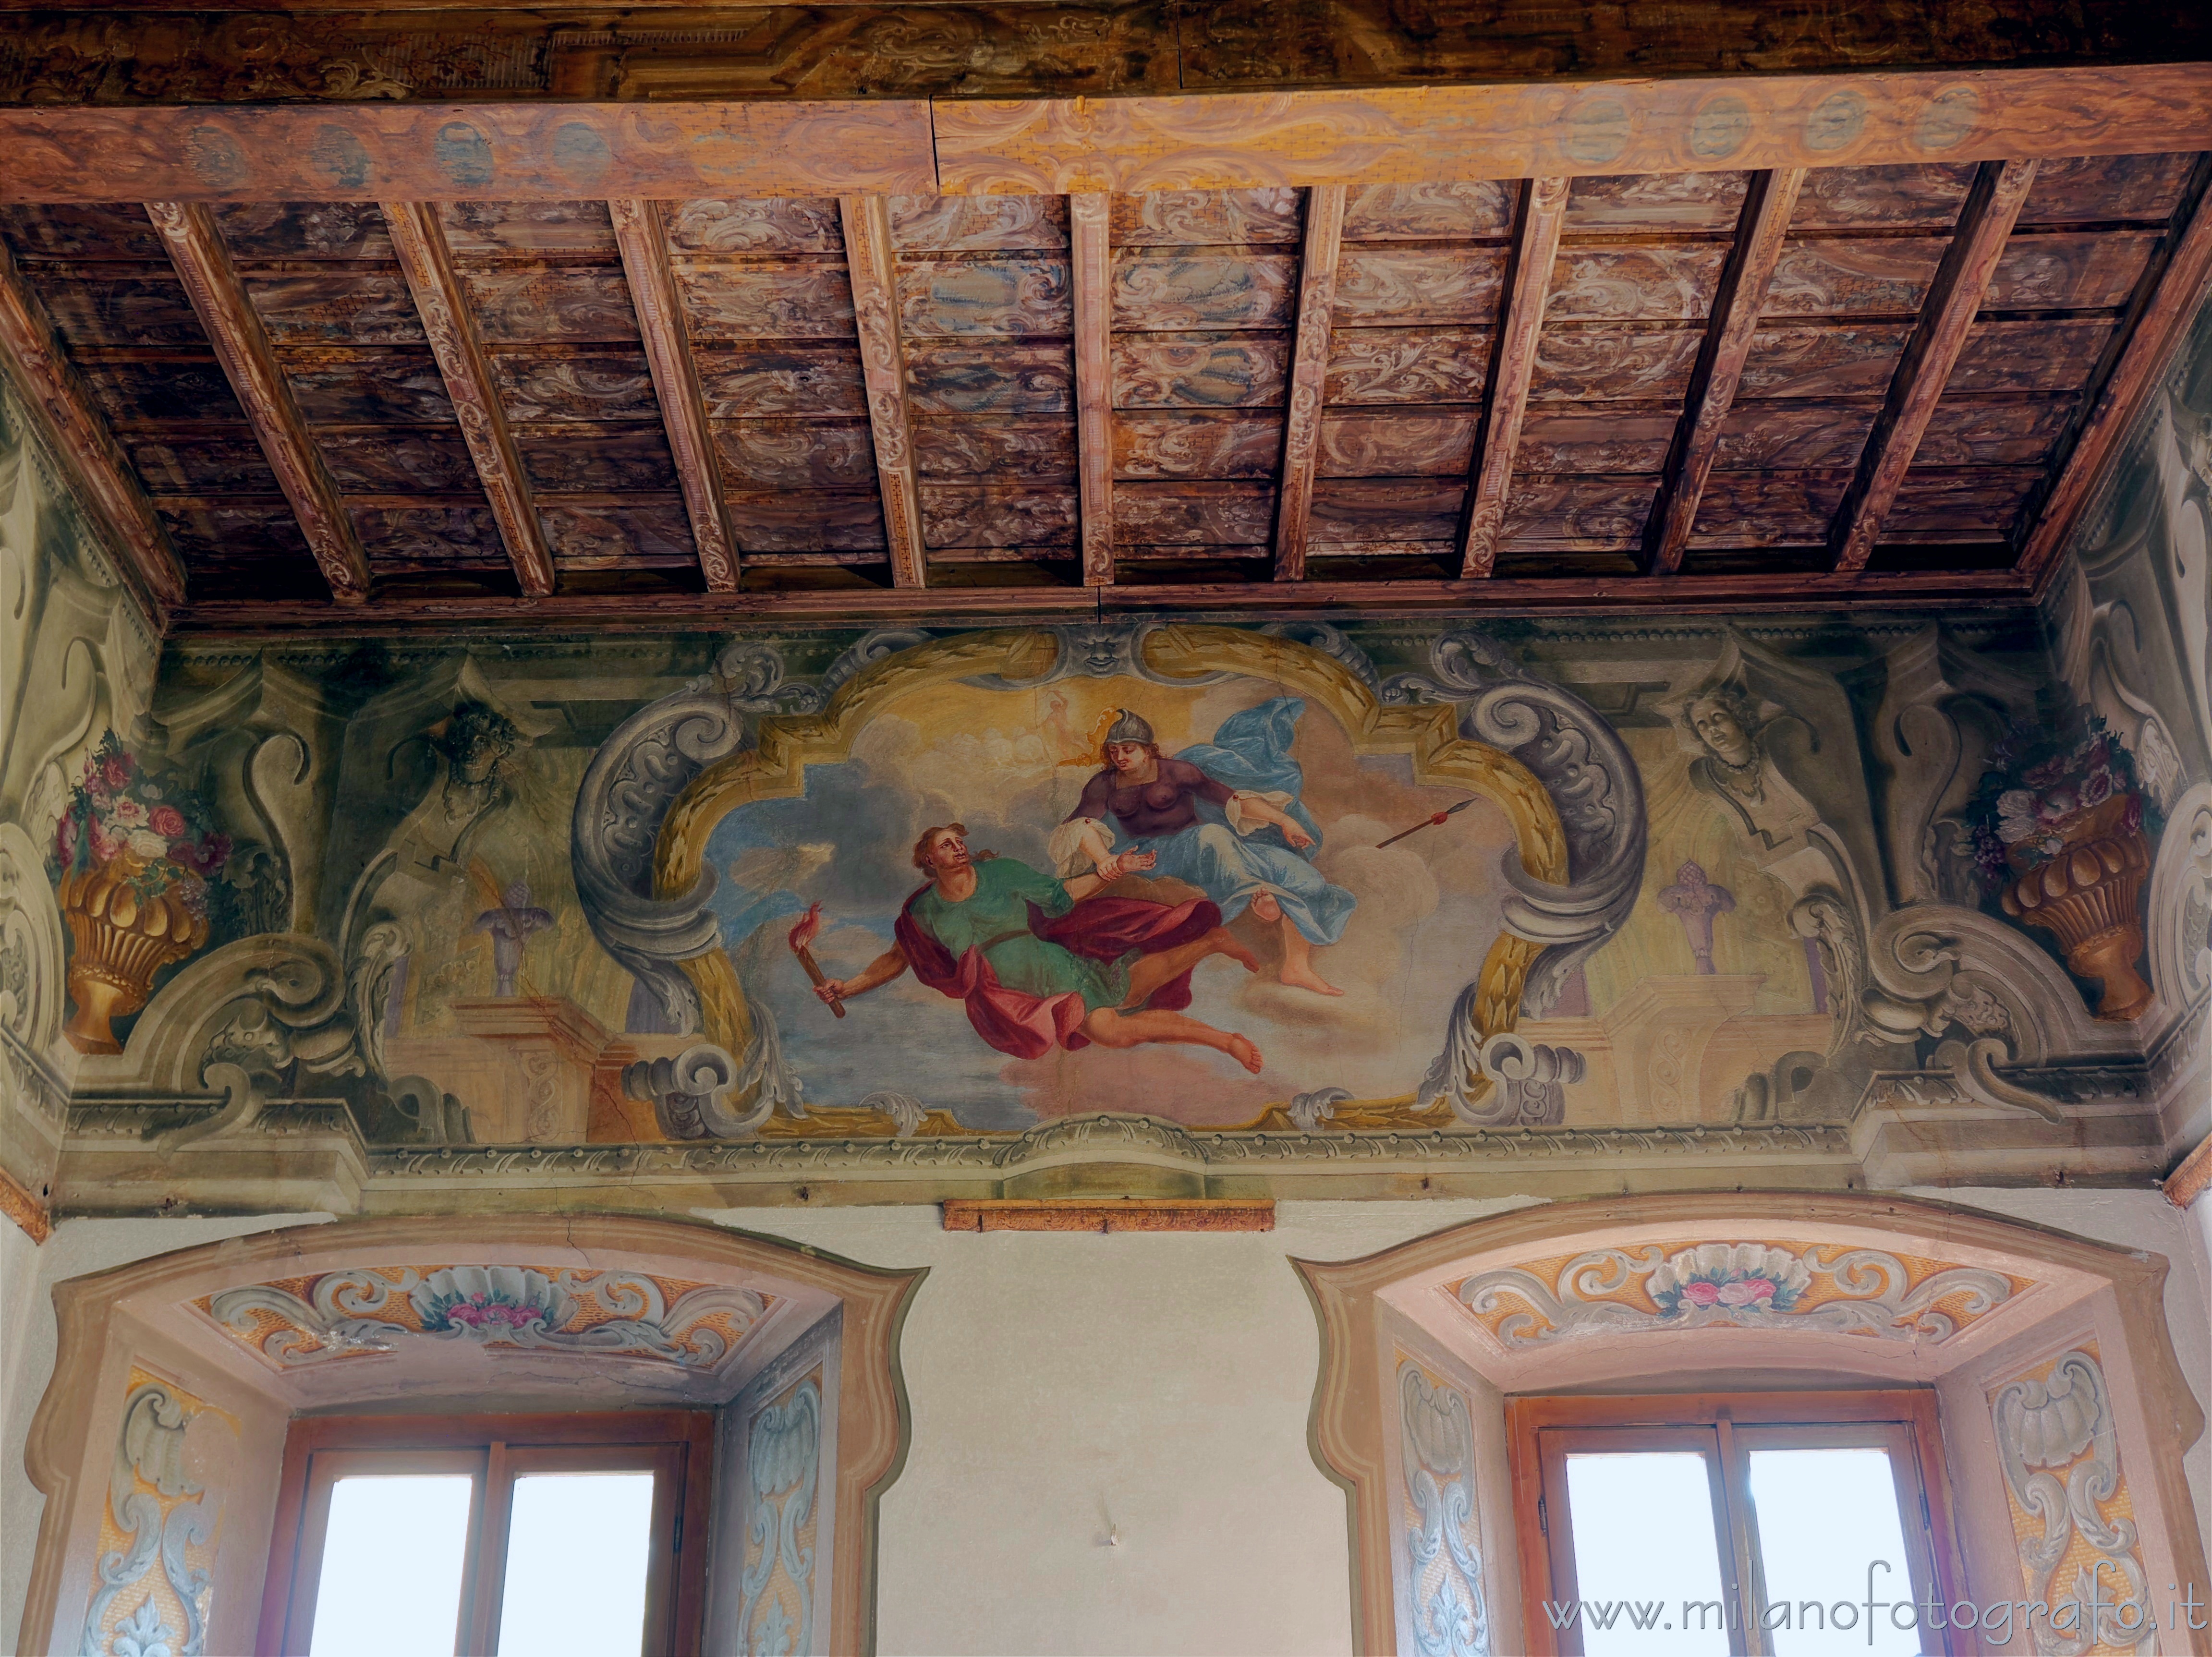 Vimercate (Monza e Brianza, Italy): Minerva inciting Prometheus in one of the rooms of Palazzo Trotti - Vimercate (Monza e Brianza, Italy)